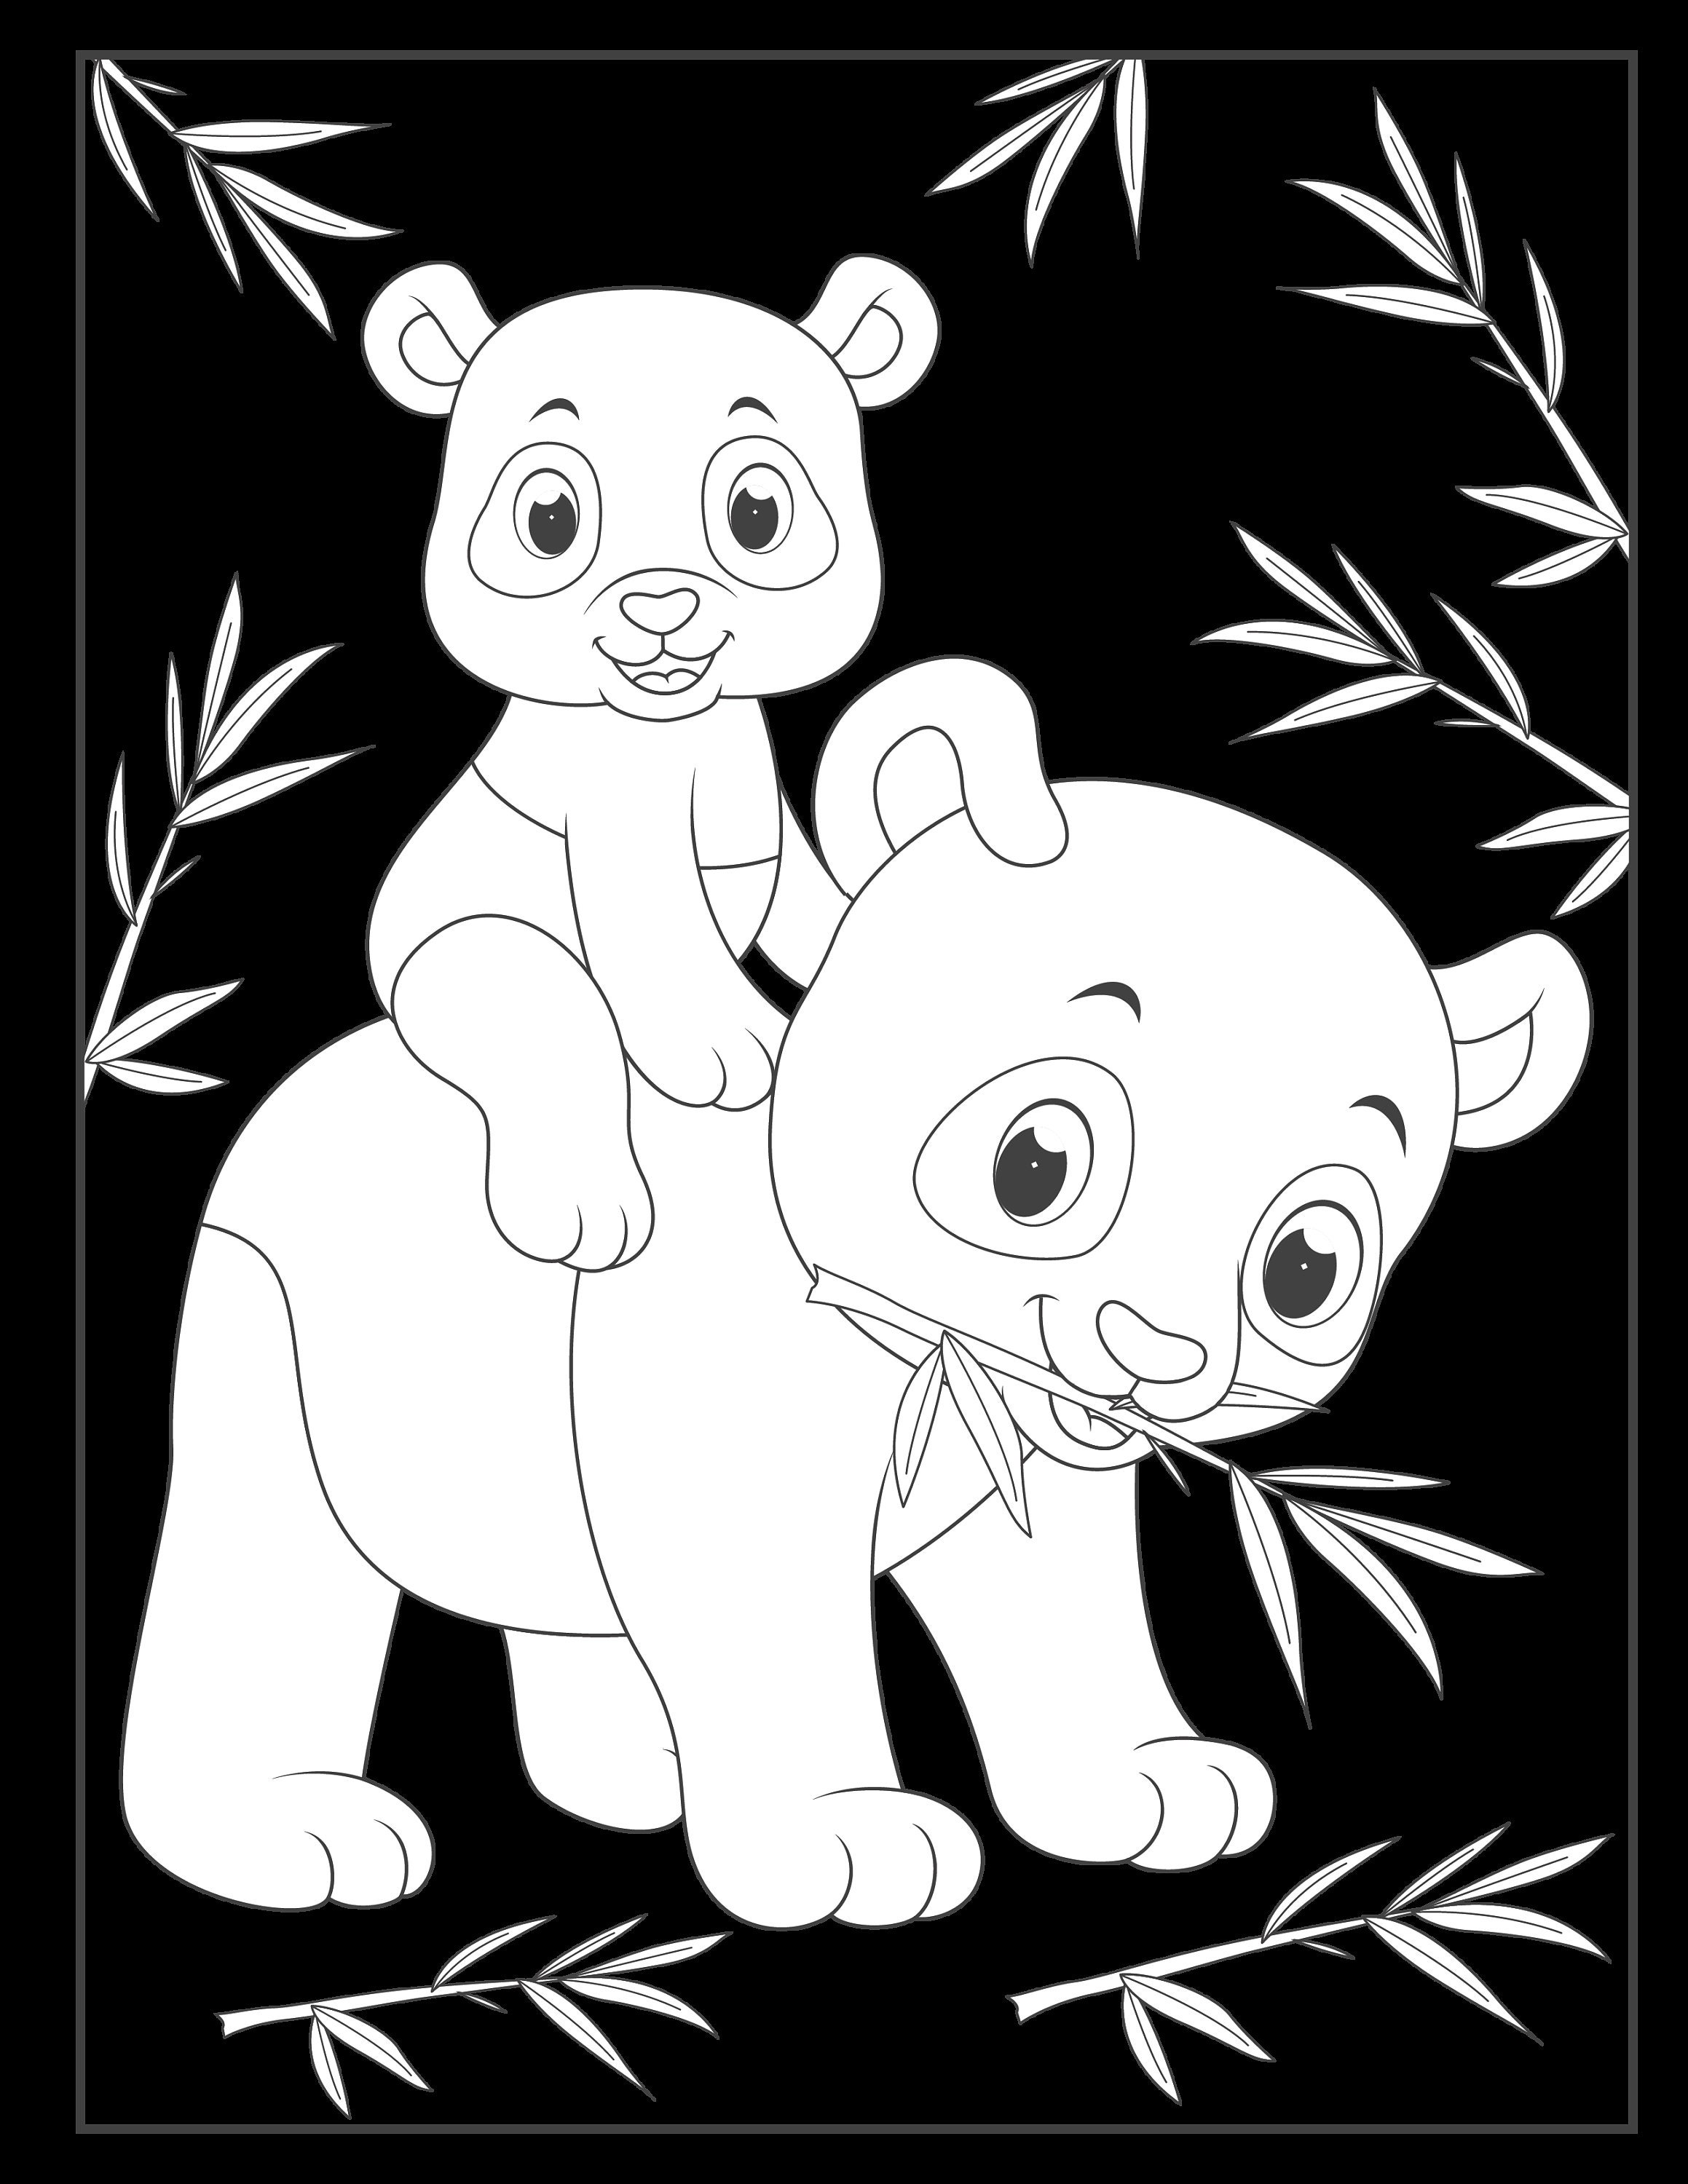 Leuke Kleurplaten van Panda's om Uit te Printen